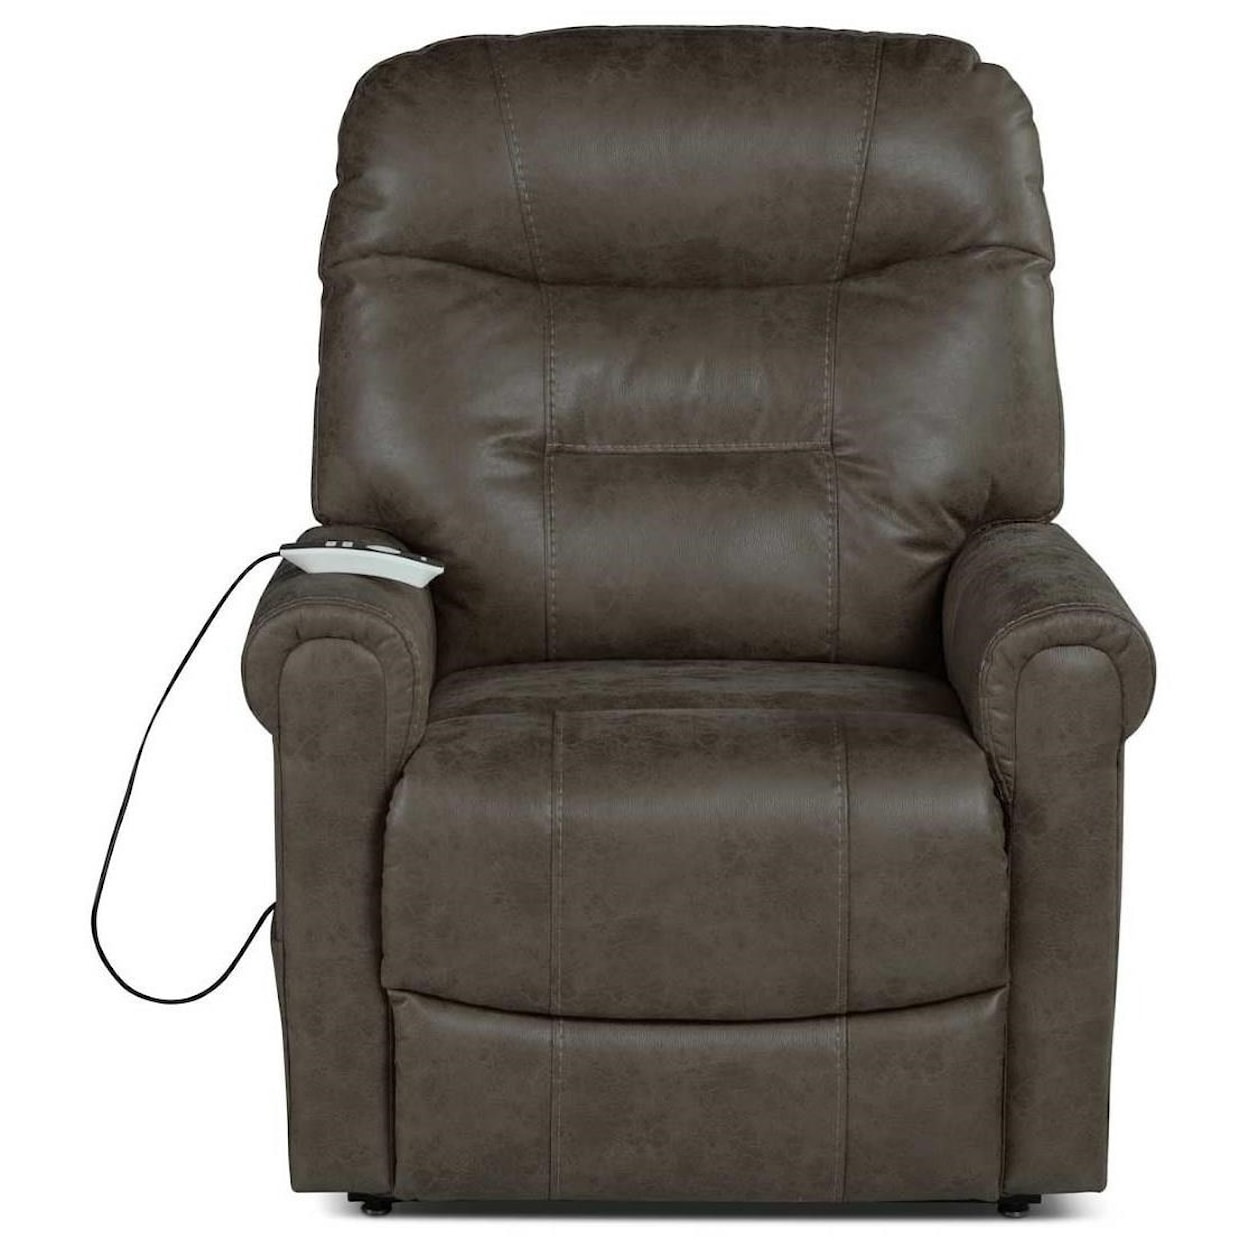 Prime Ottawa Power Lift Chair w/ Heat and Massage